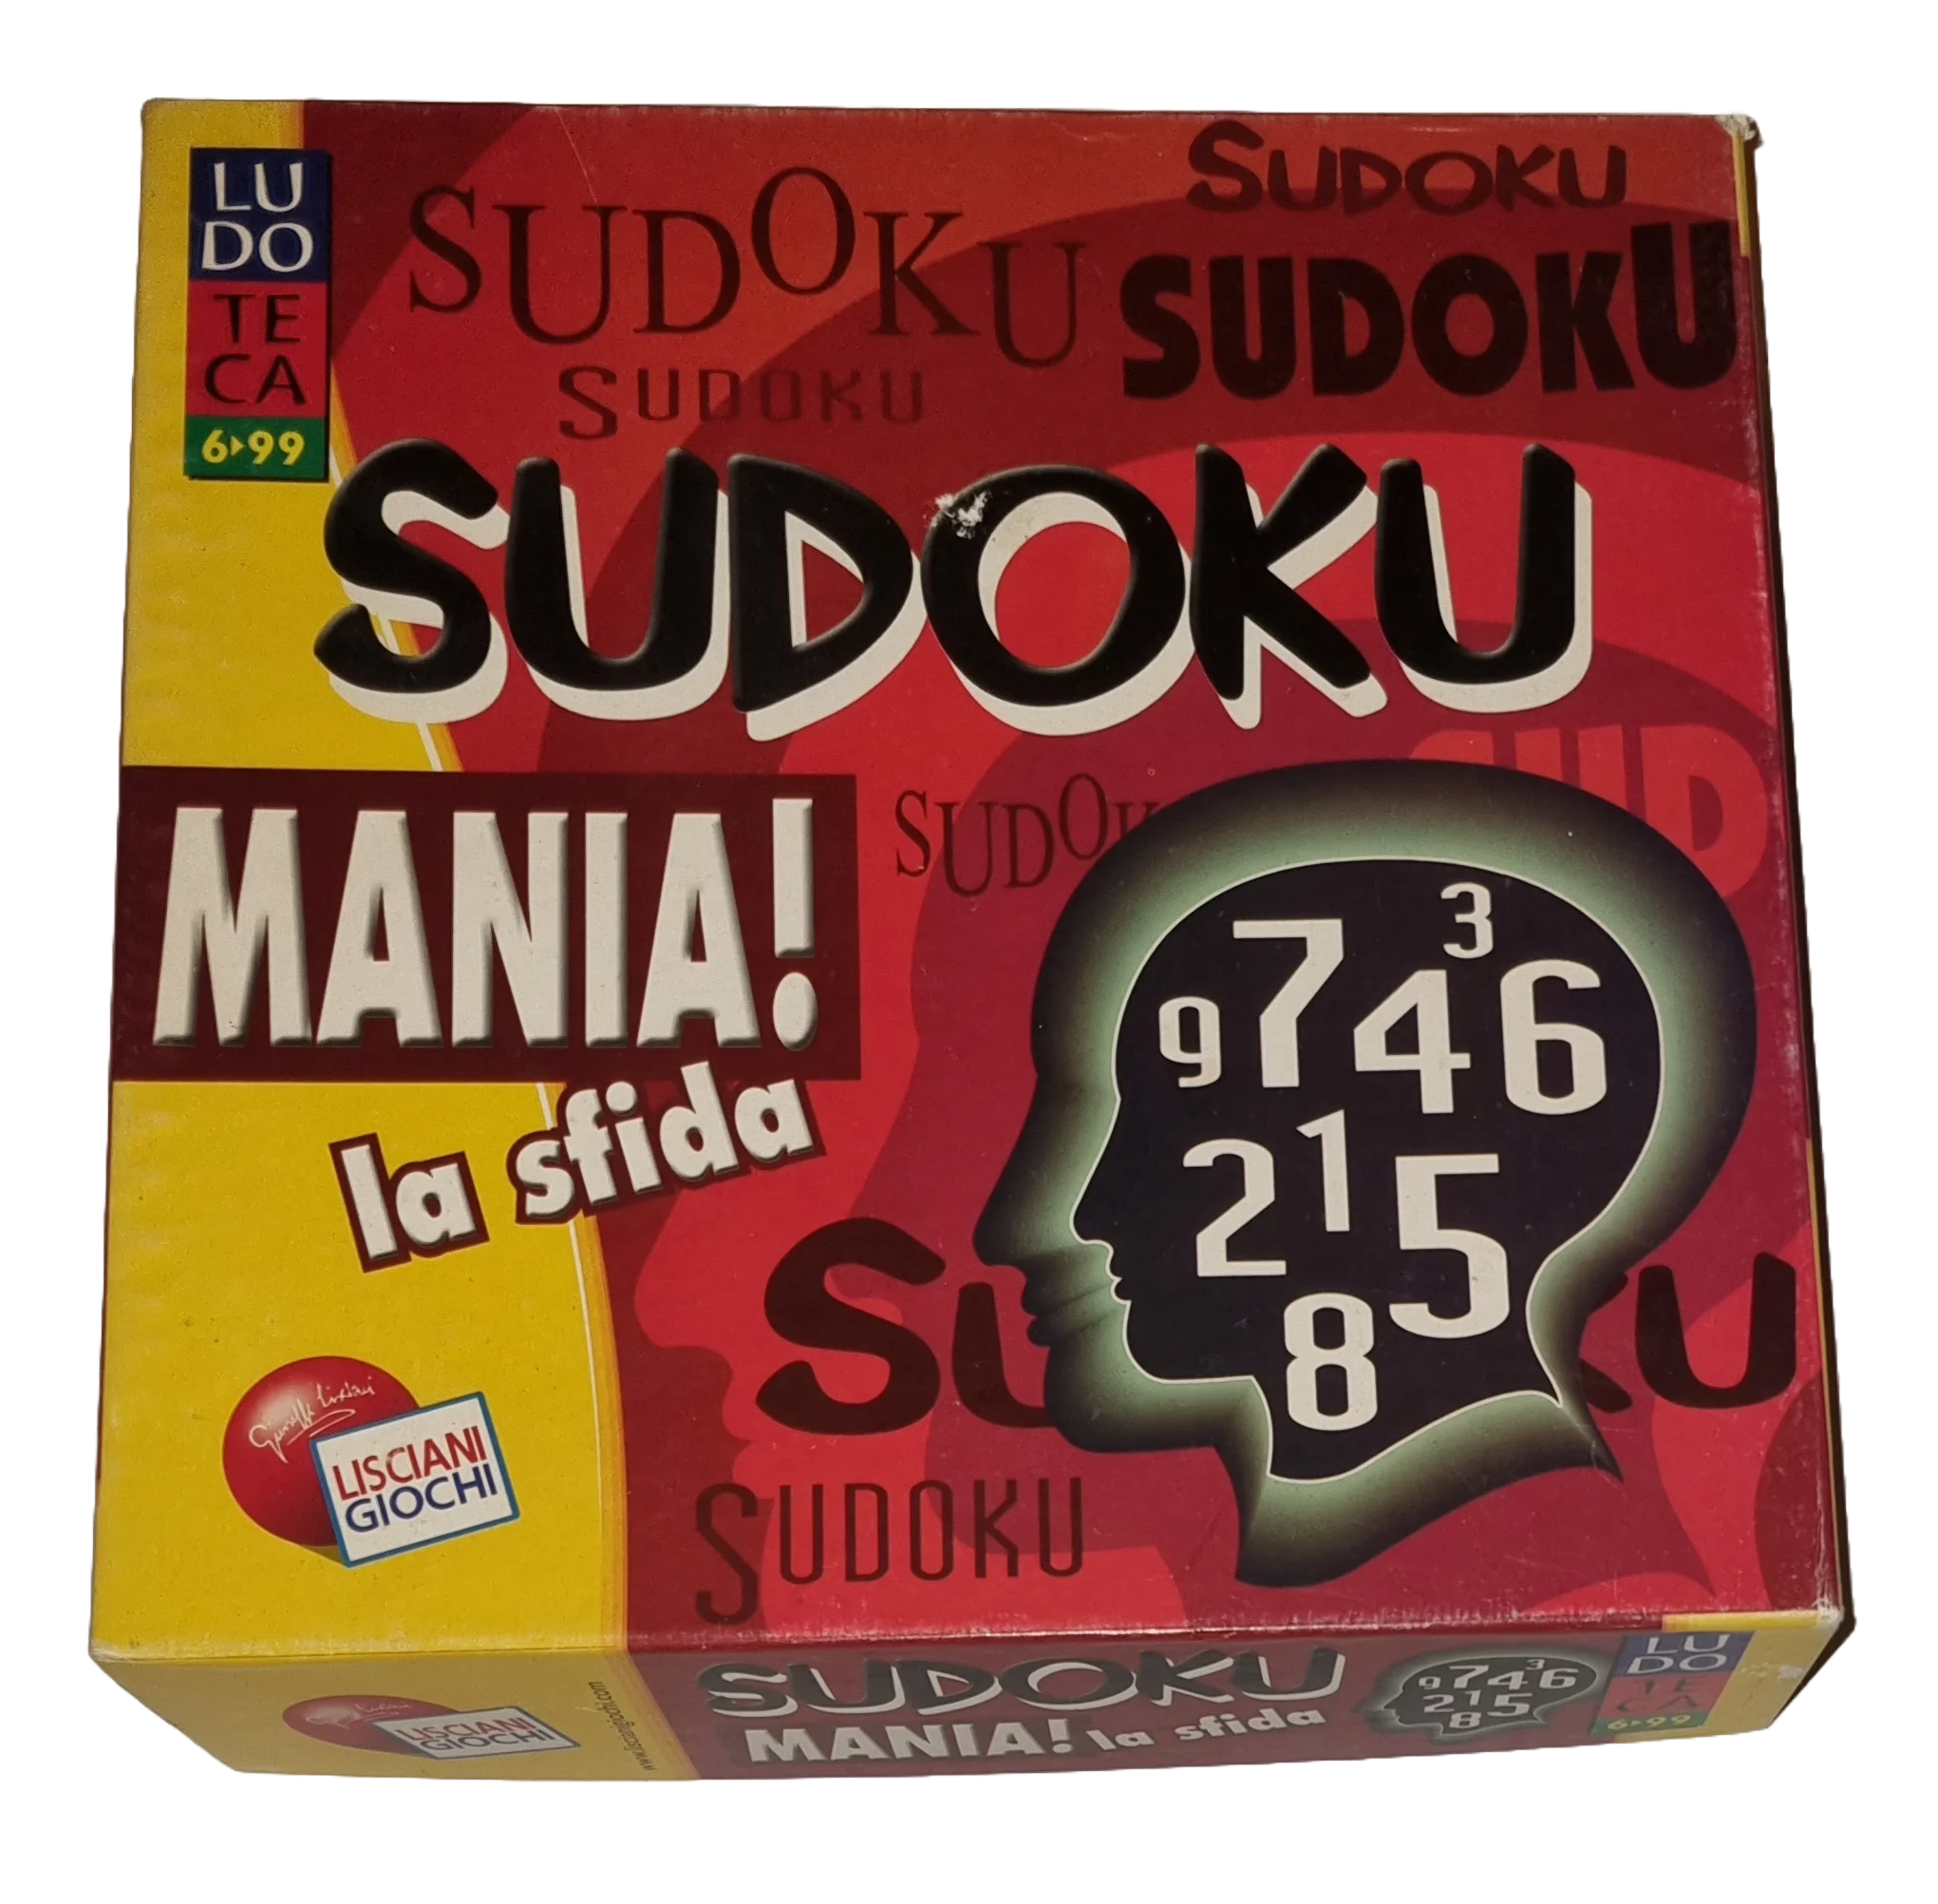 Lisciani Giochi Sudoku Mania!